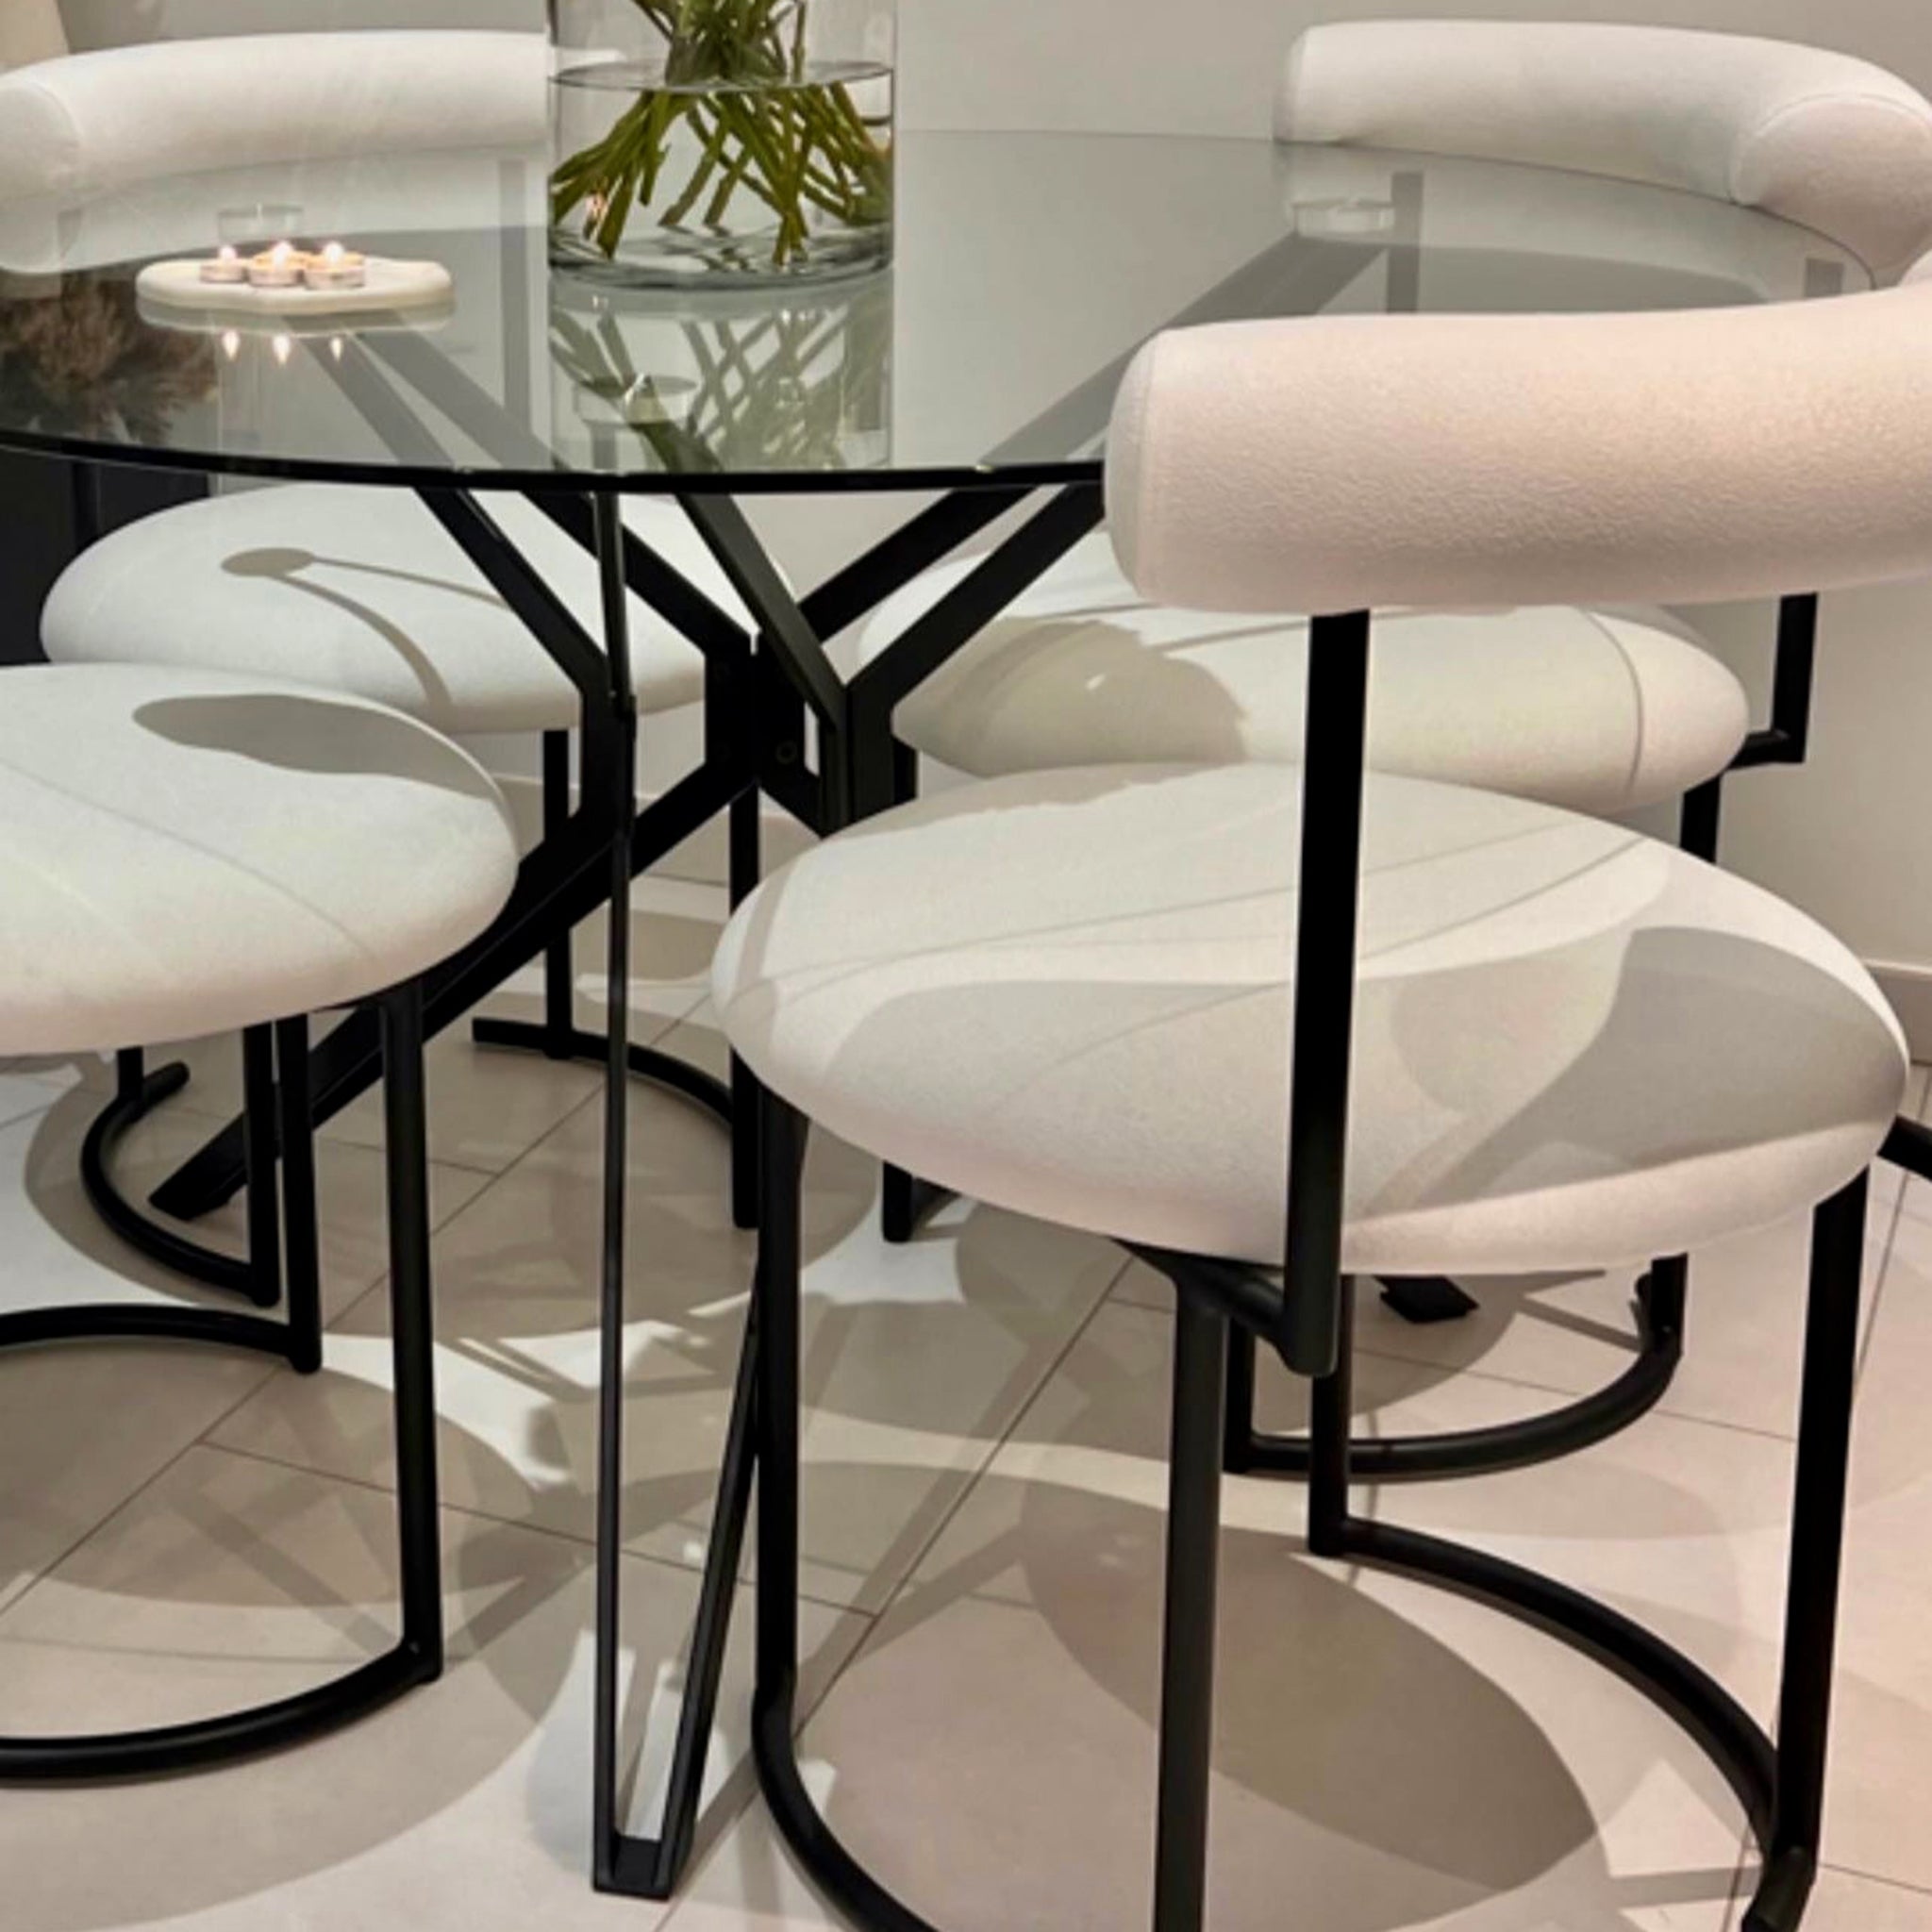 Modern dining chair design